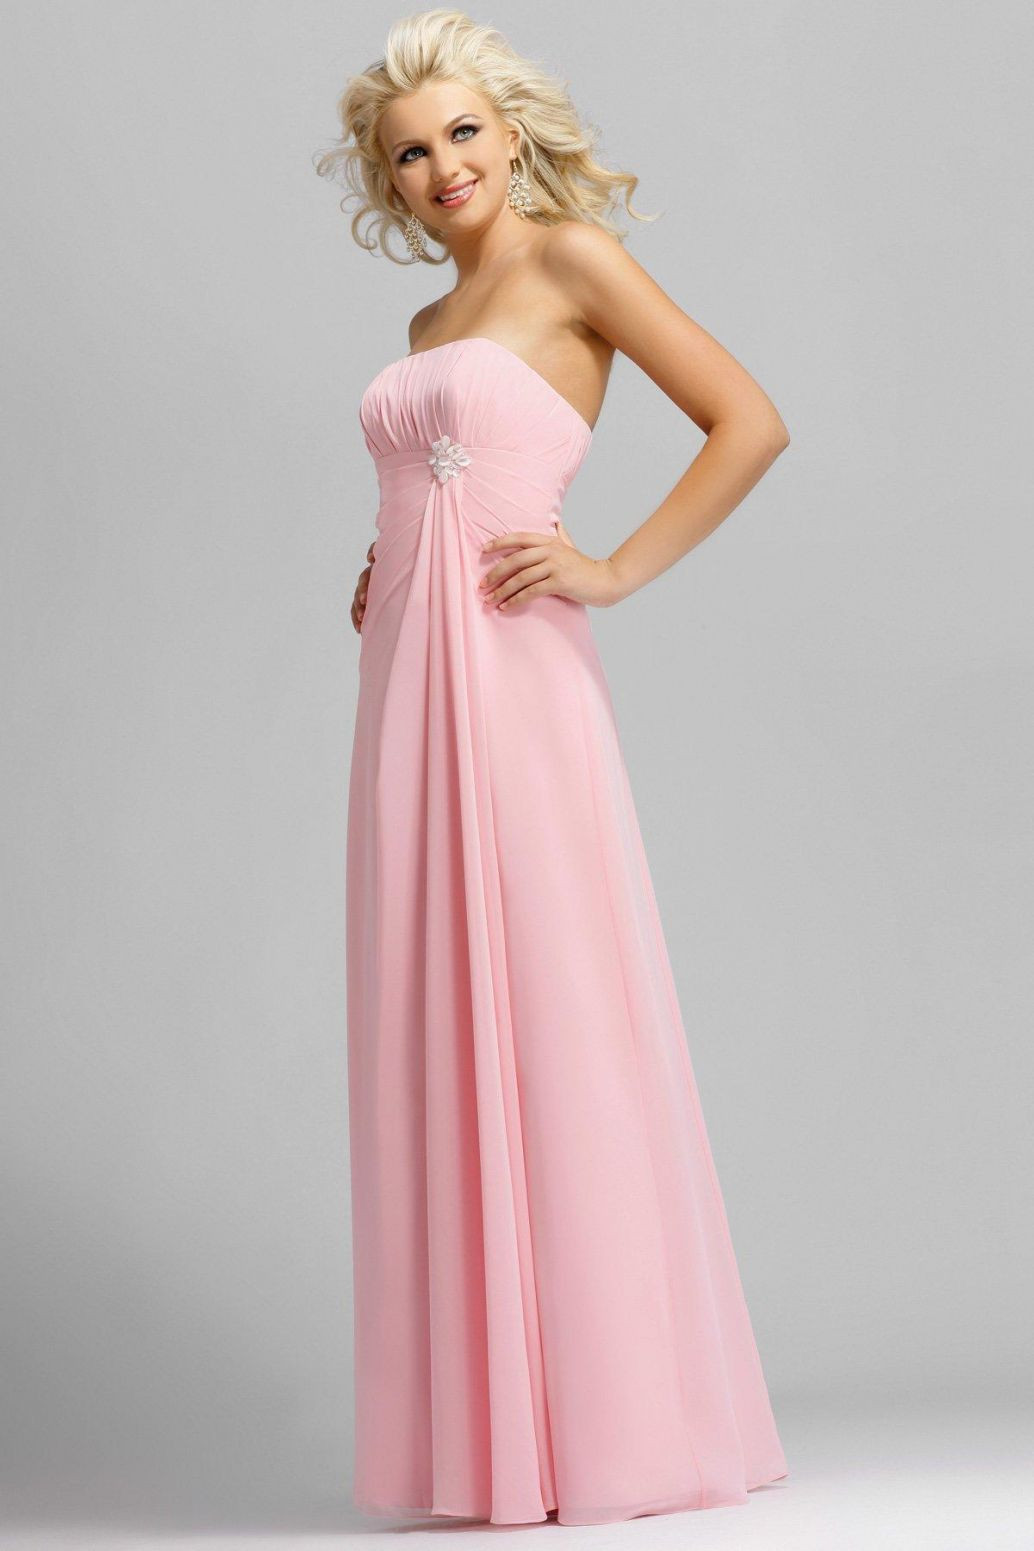 Wedding Dresses Images
 Long Bright Pink Bridesmaid Dress Designs Wedding Dress